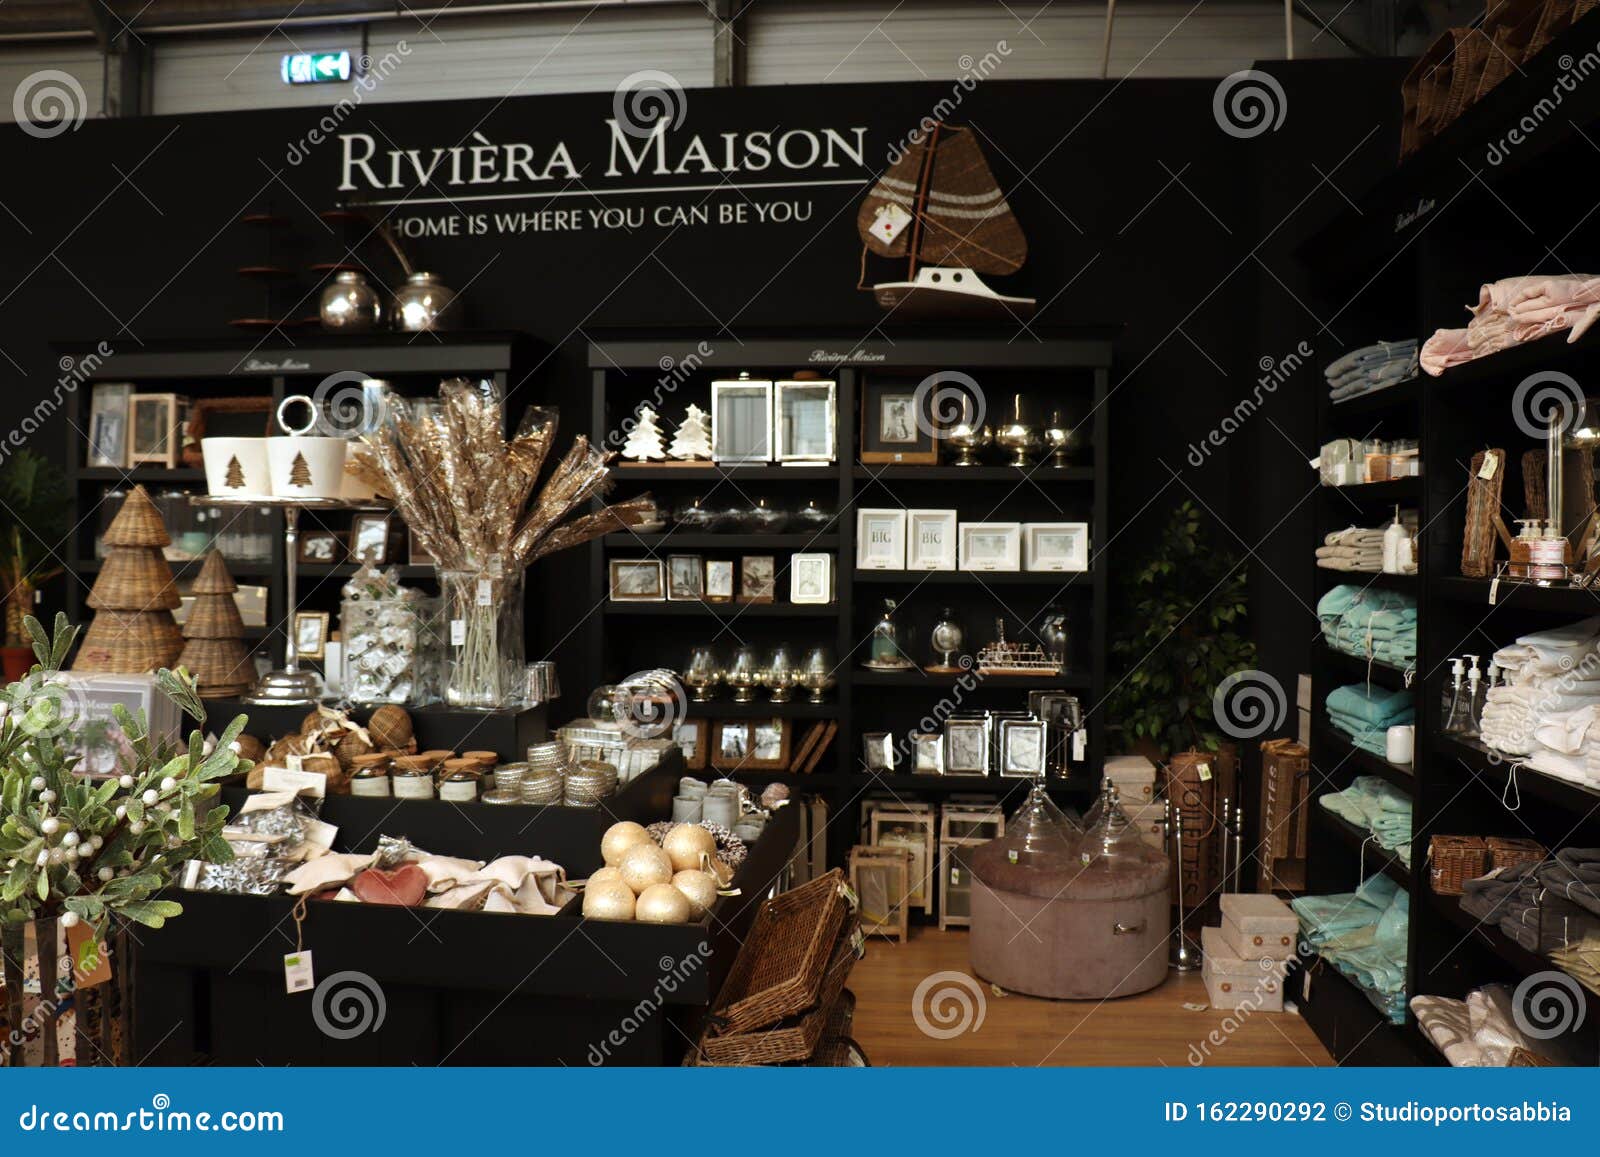 terug Mijlpaal Samenpersen Cruquius, the Netherlands - October 26th 2018: Riviera Maison Retail  Display in Interior Shop Editorial Photography - Image of shelves,  merchandise: 162290292